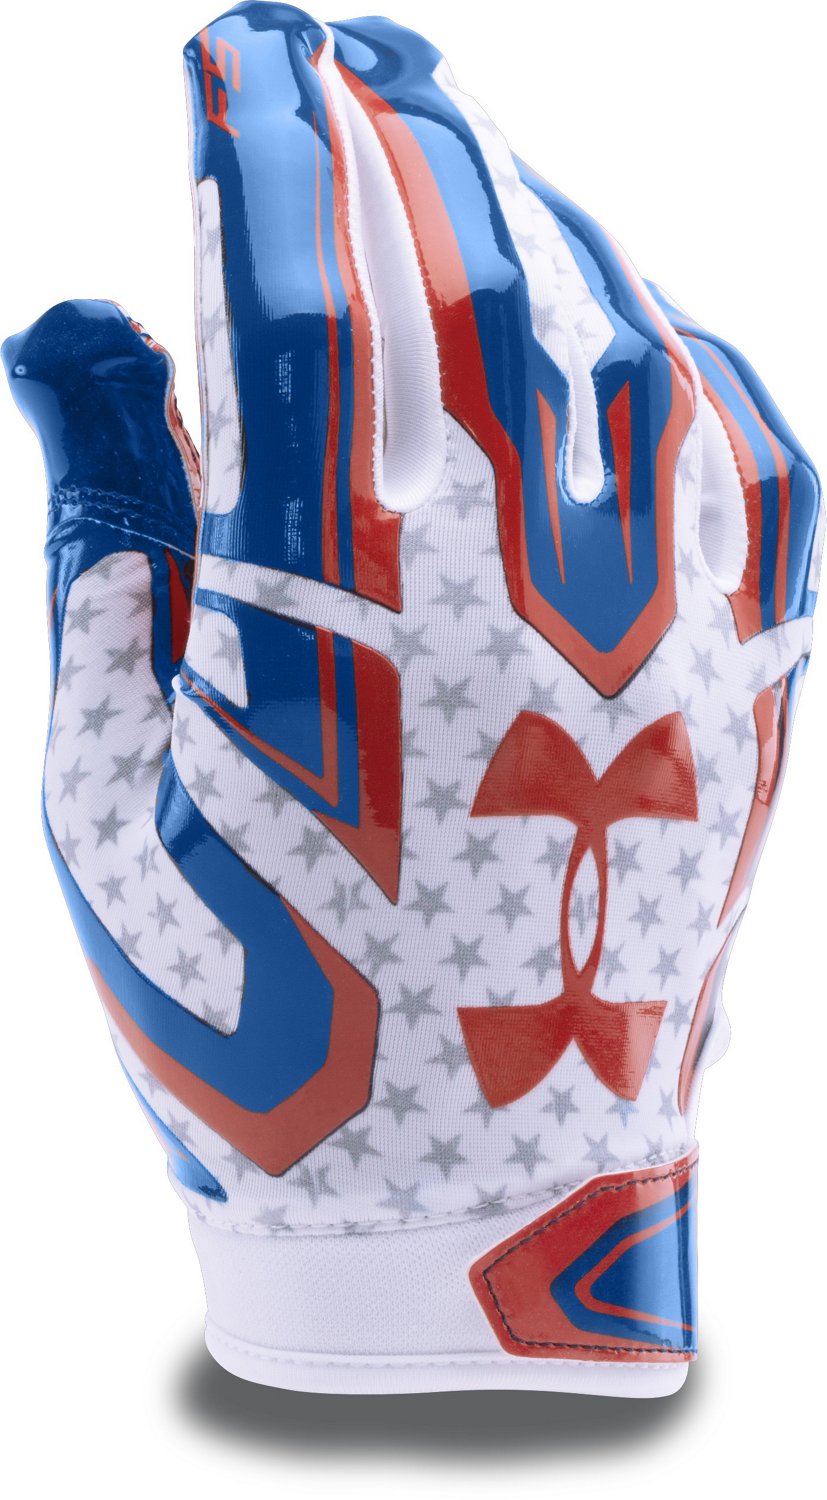 customize football gloves under armour